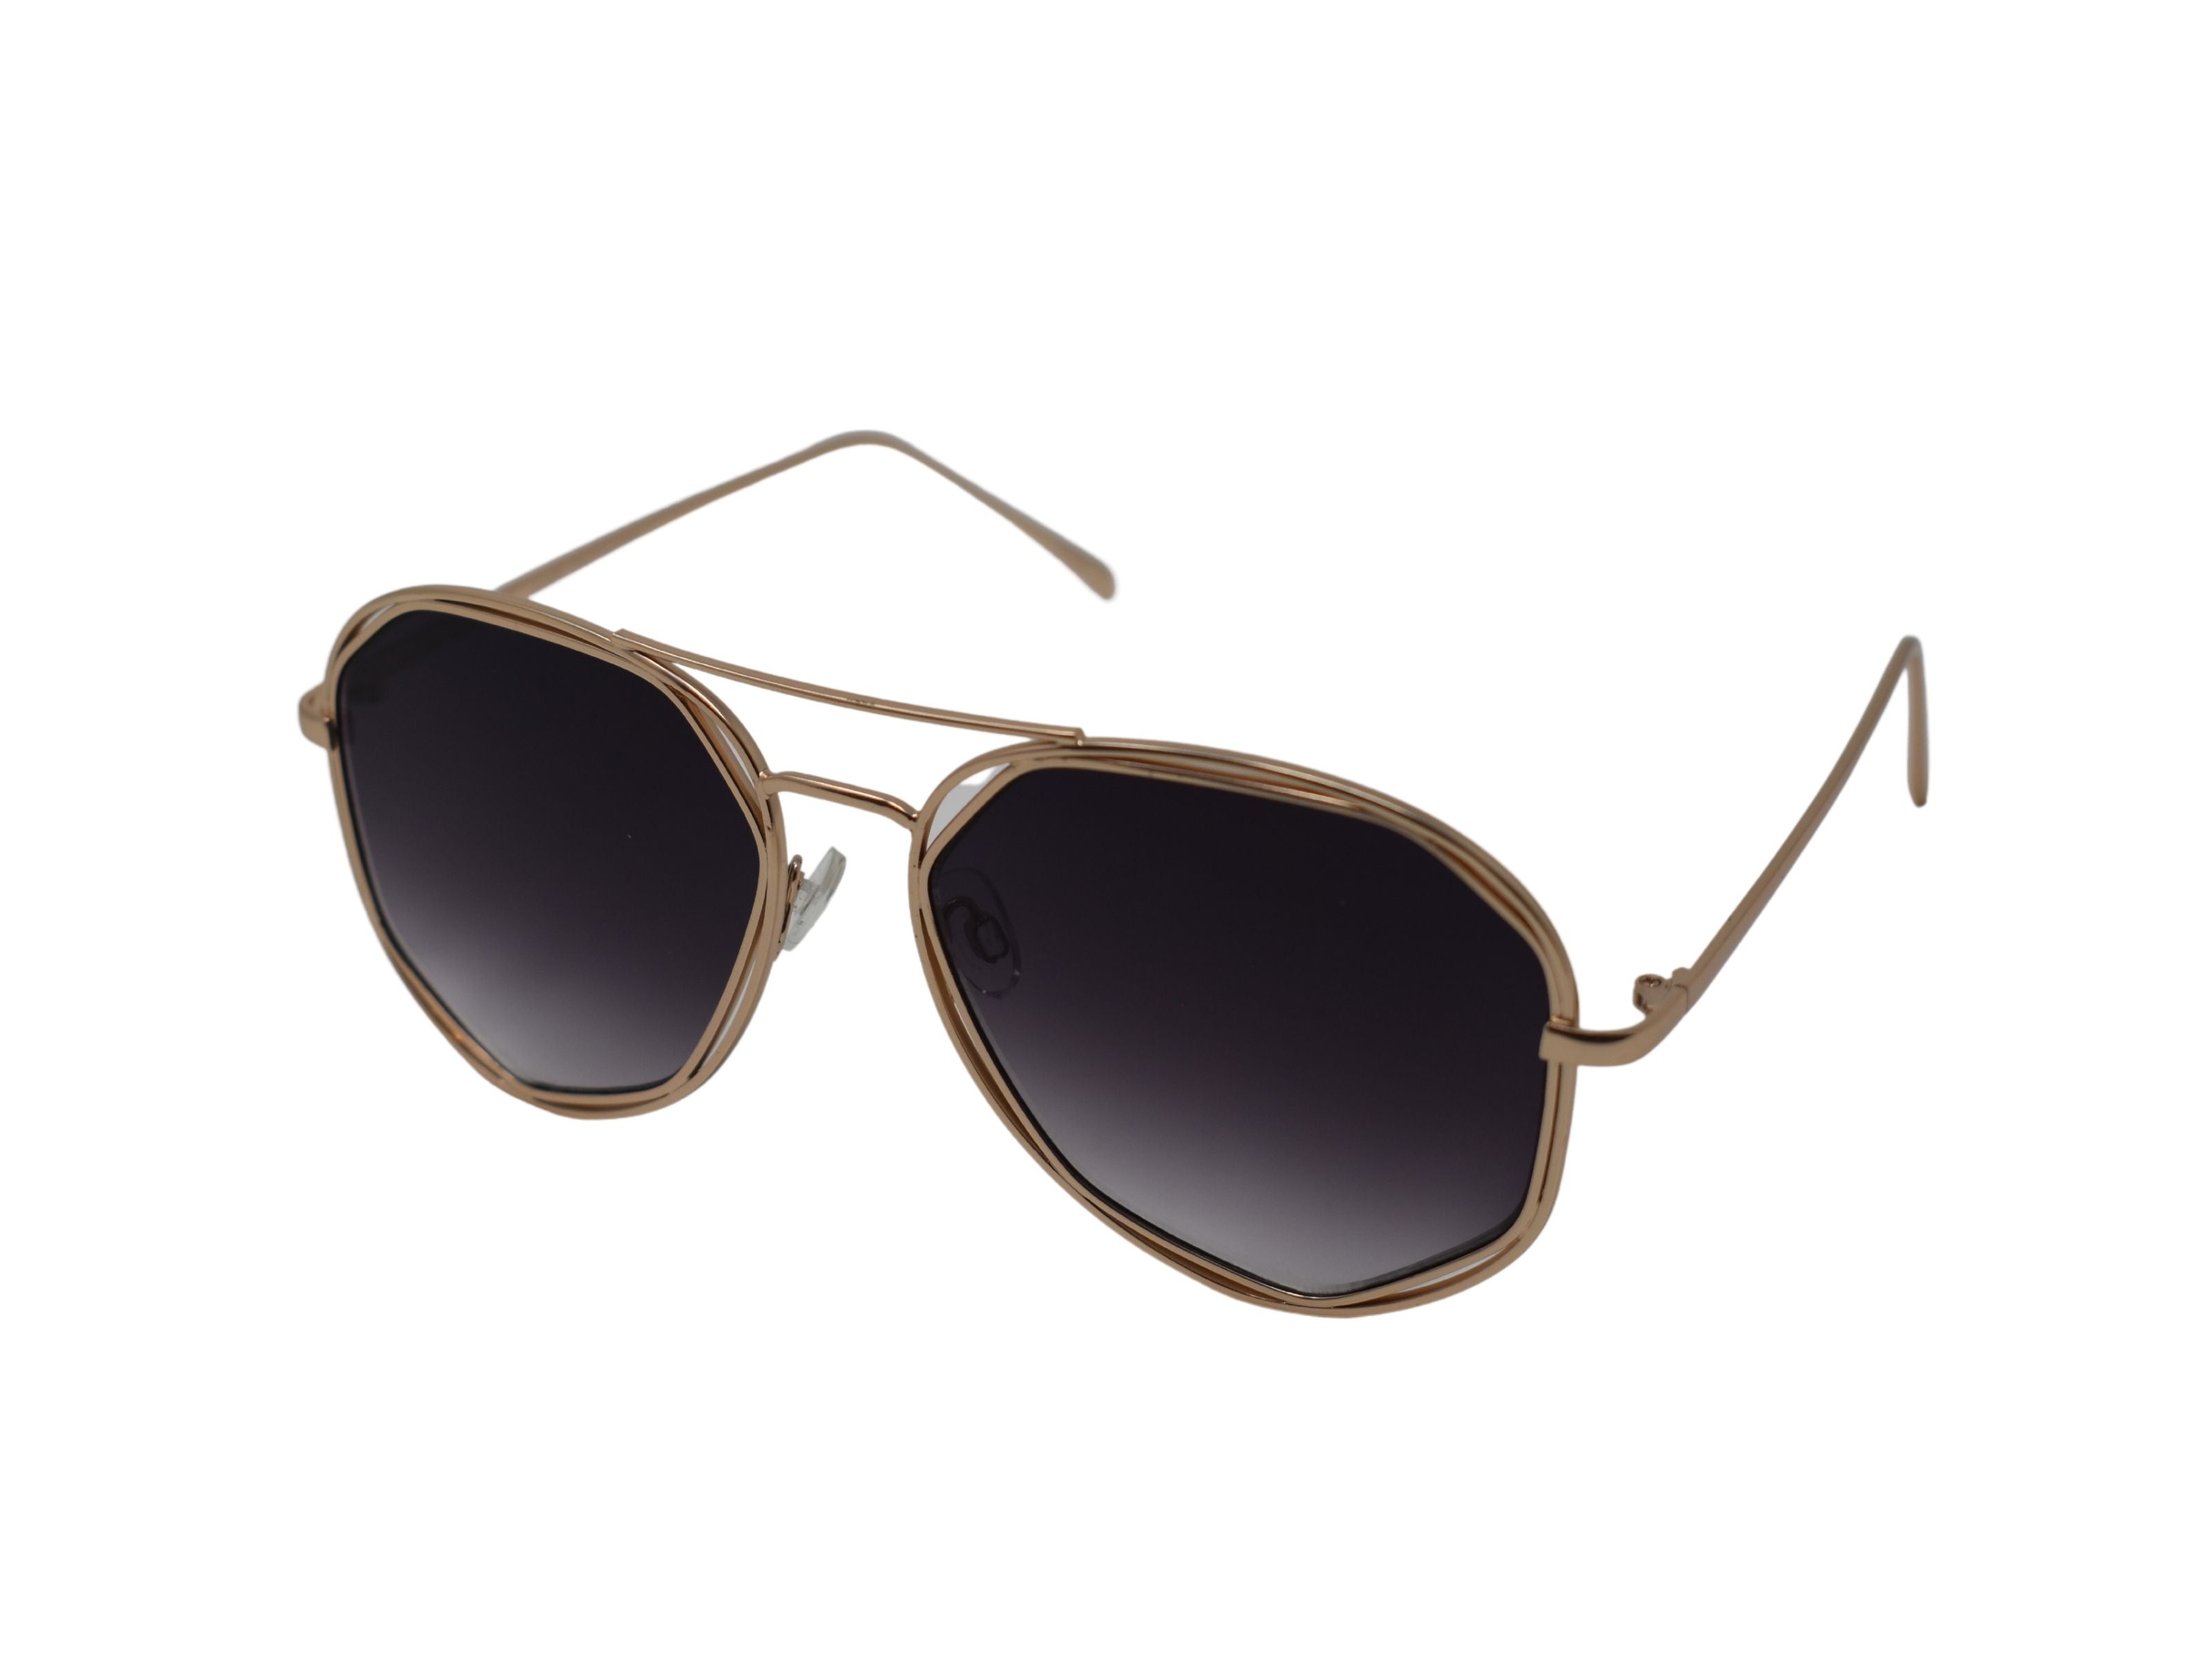 Dare to be bold in our Bergenia Geometric Aviator style Sunglasses.